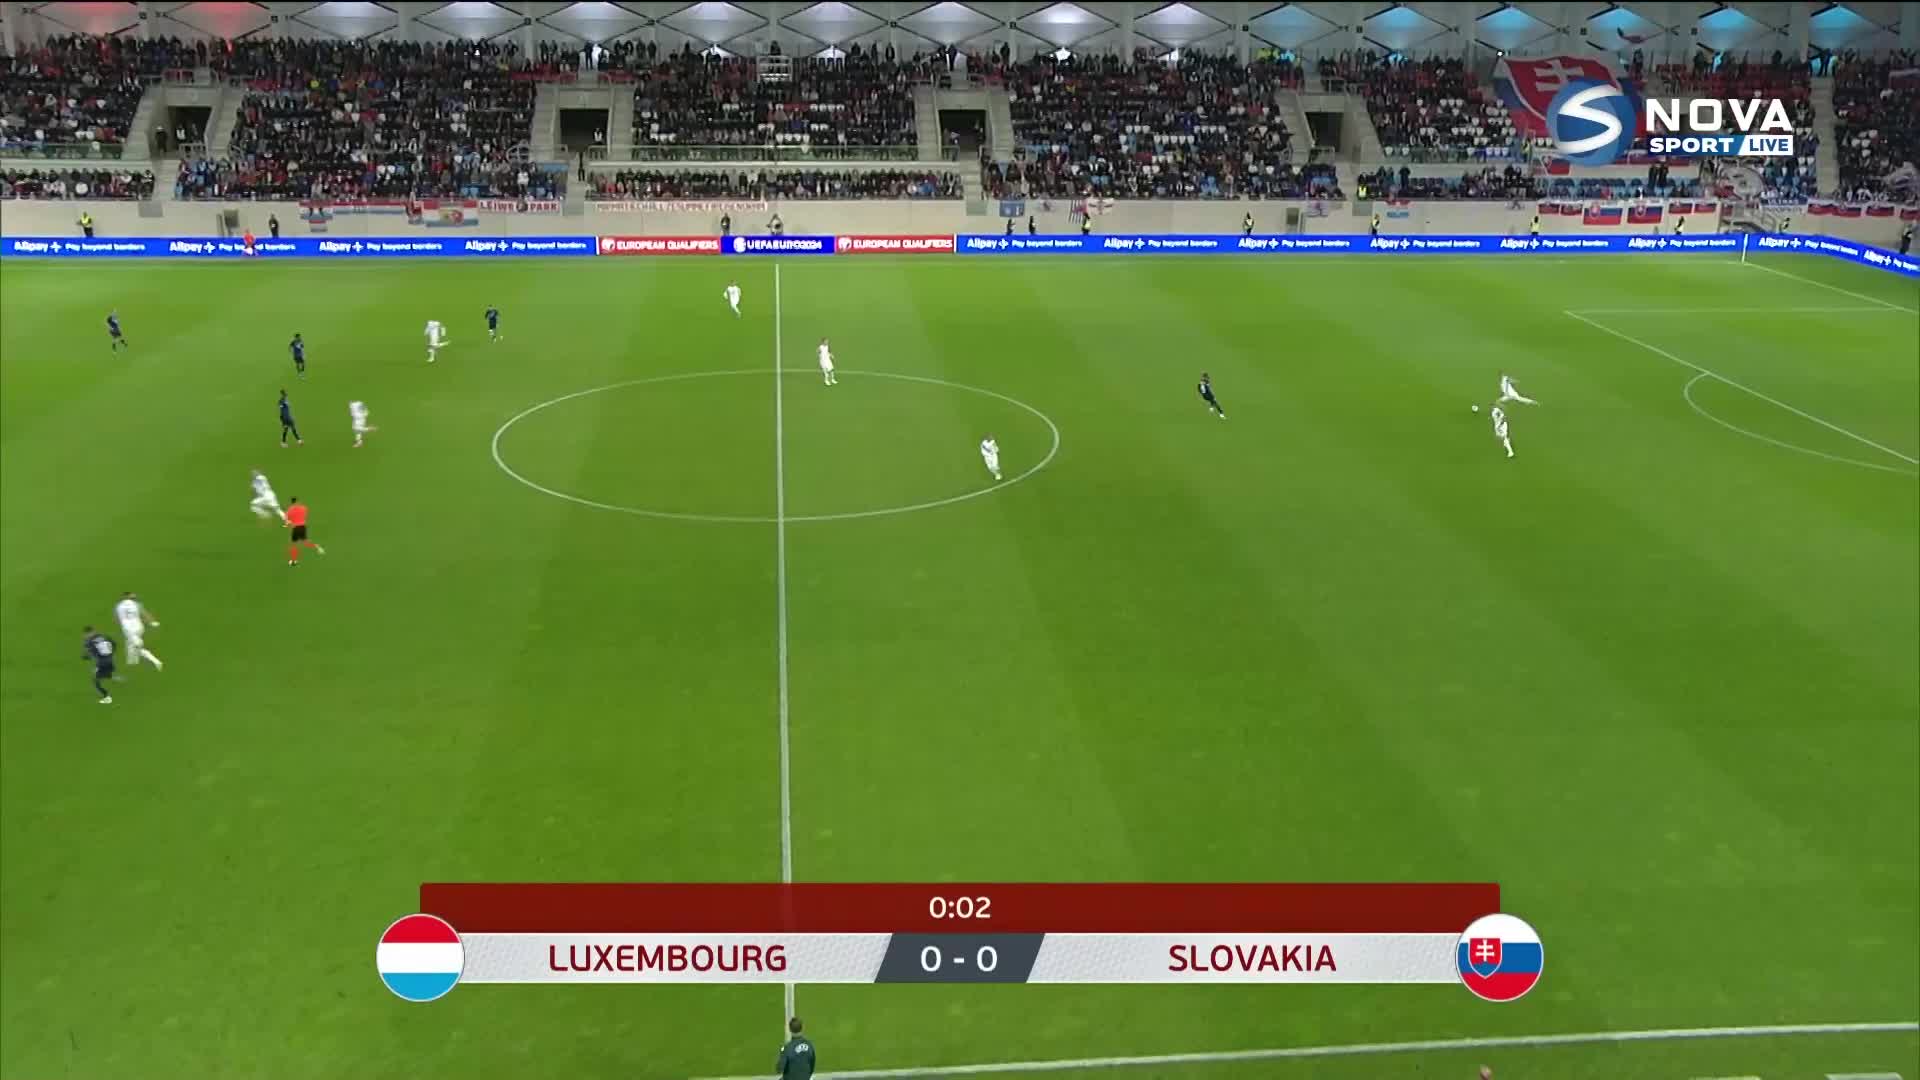 Люксембург - Словакия 0:1 /репортаж/